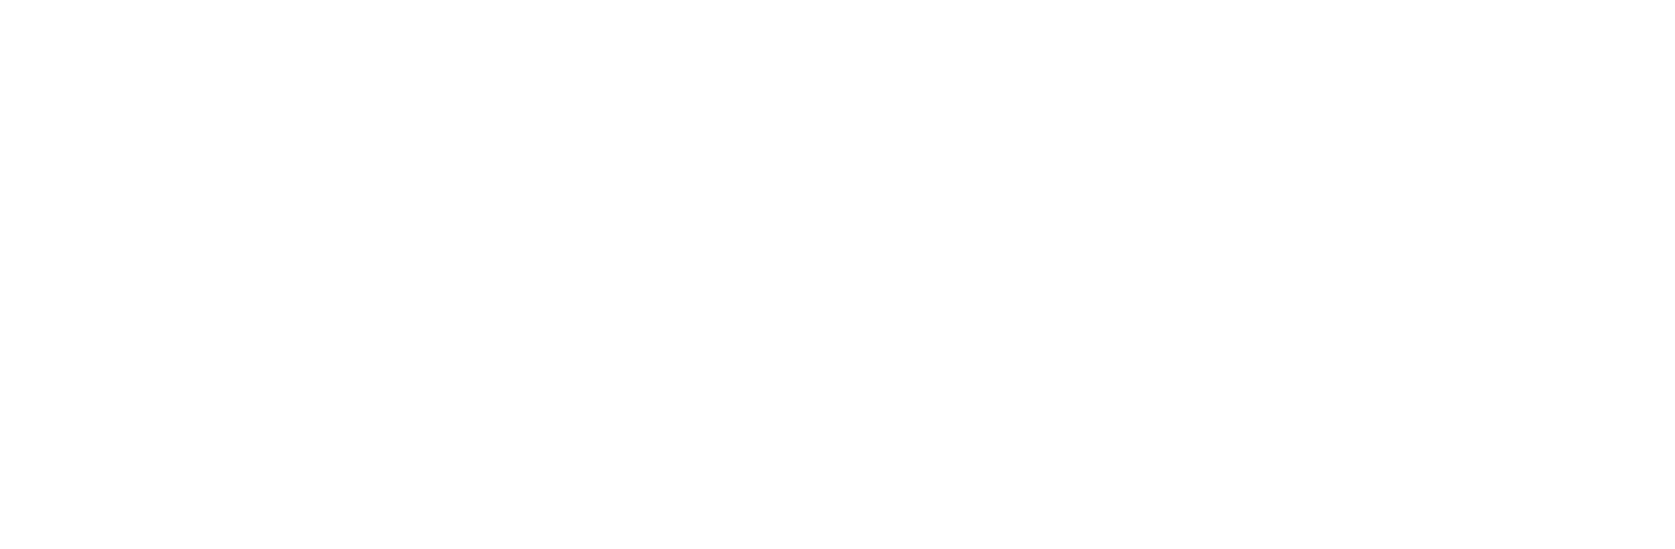 Emera Utility Services